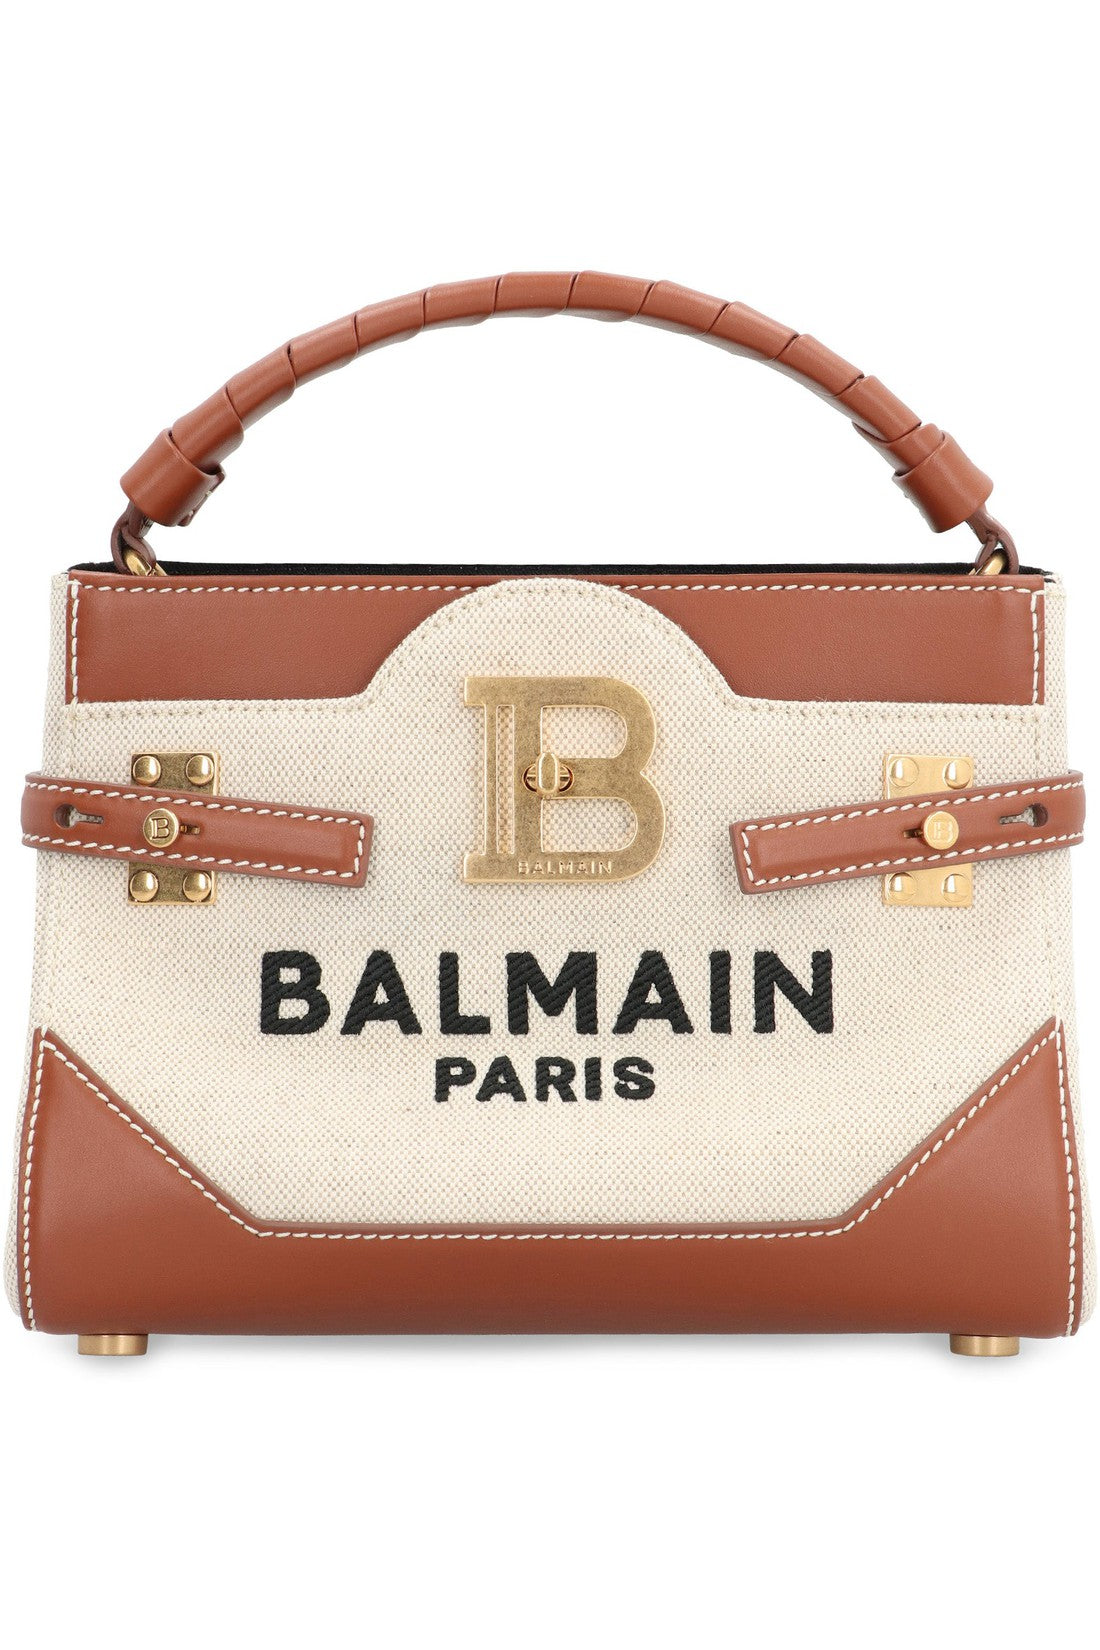 Balmain-OUTLET-SALE-B-Buzz 22 canvas handbag-ARCHIVIST